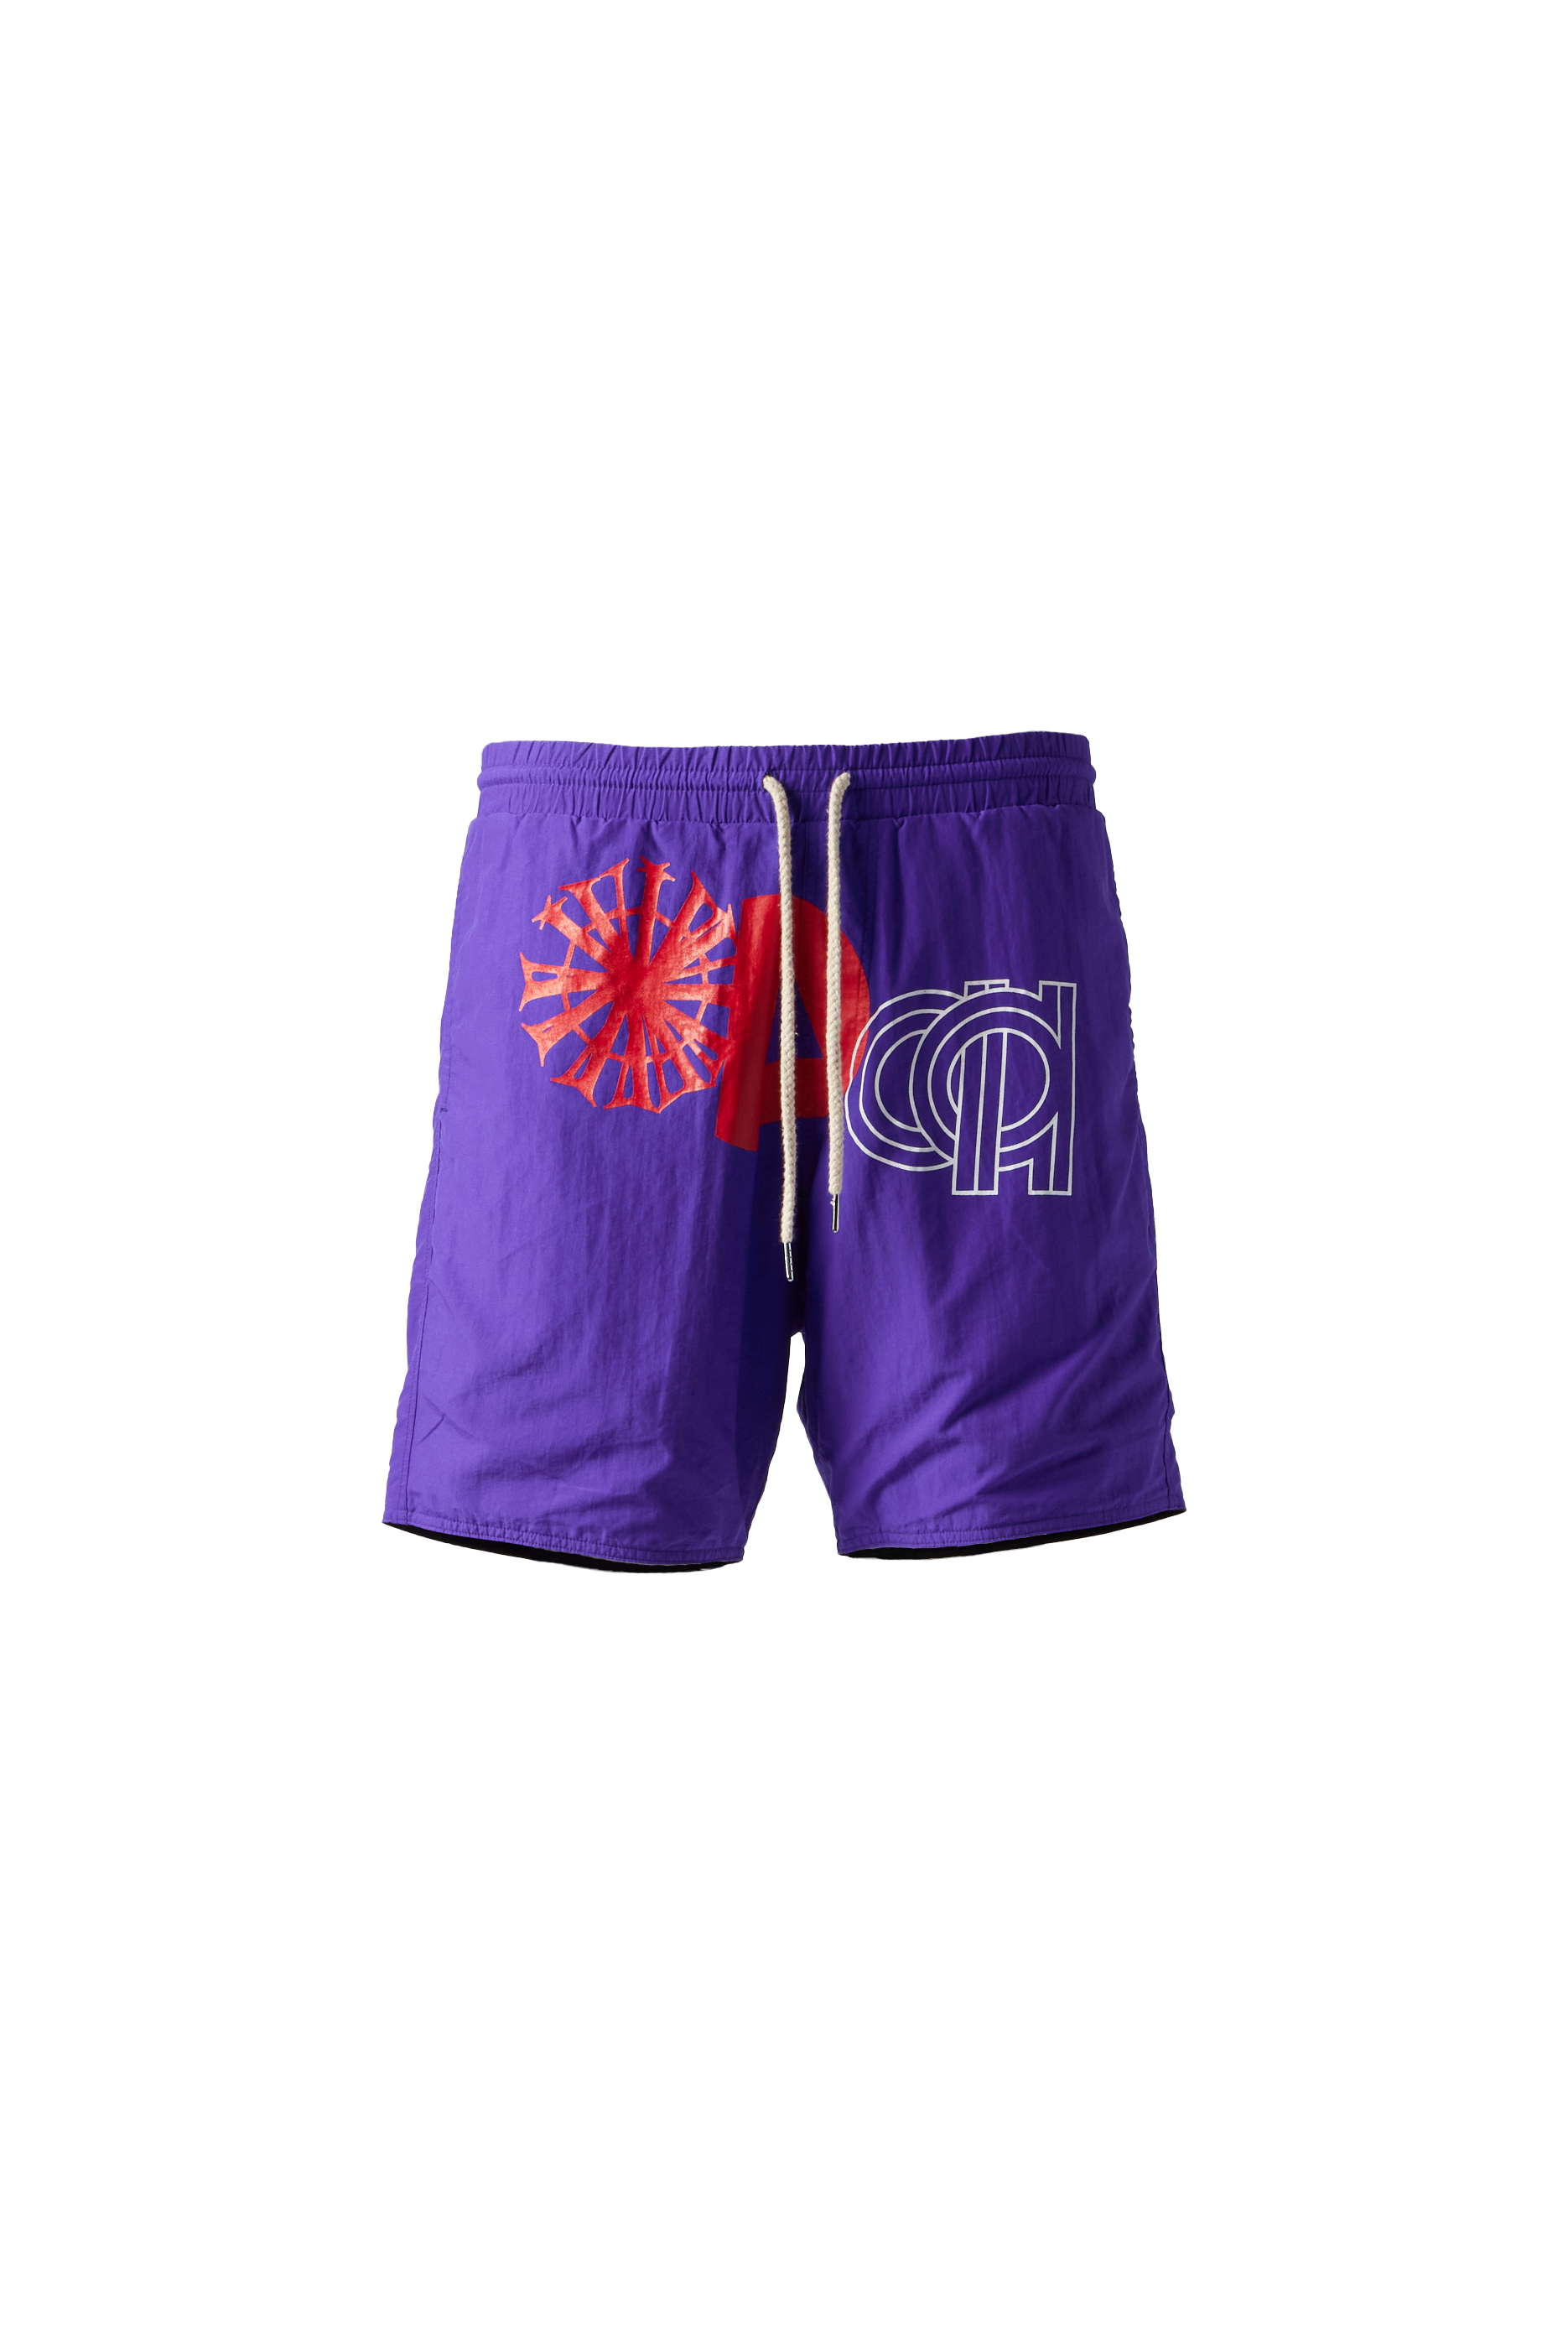 ASTRUM - Tri-Logo Purple Shorts product image